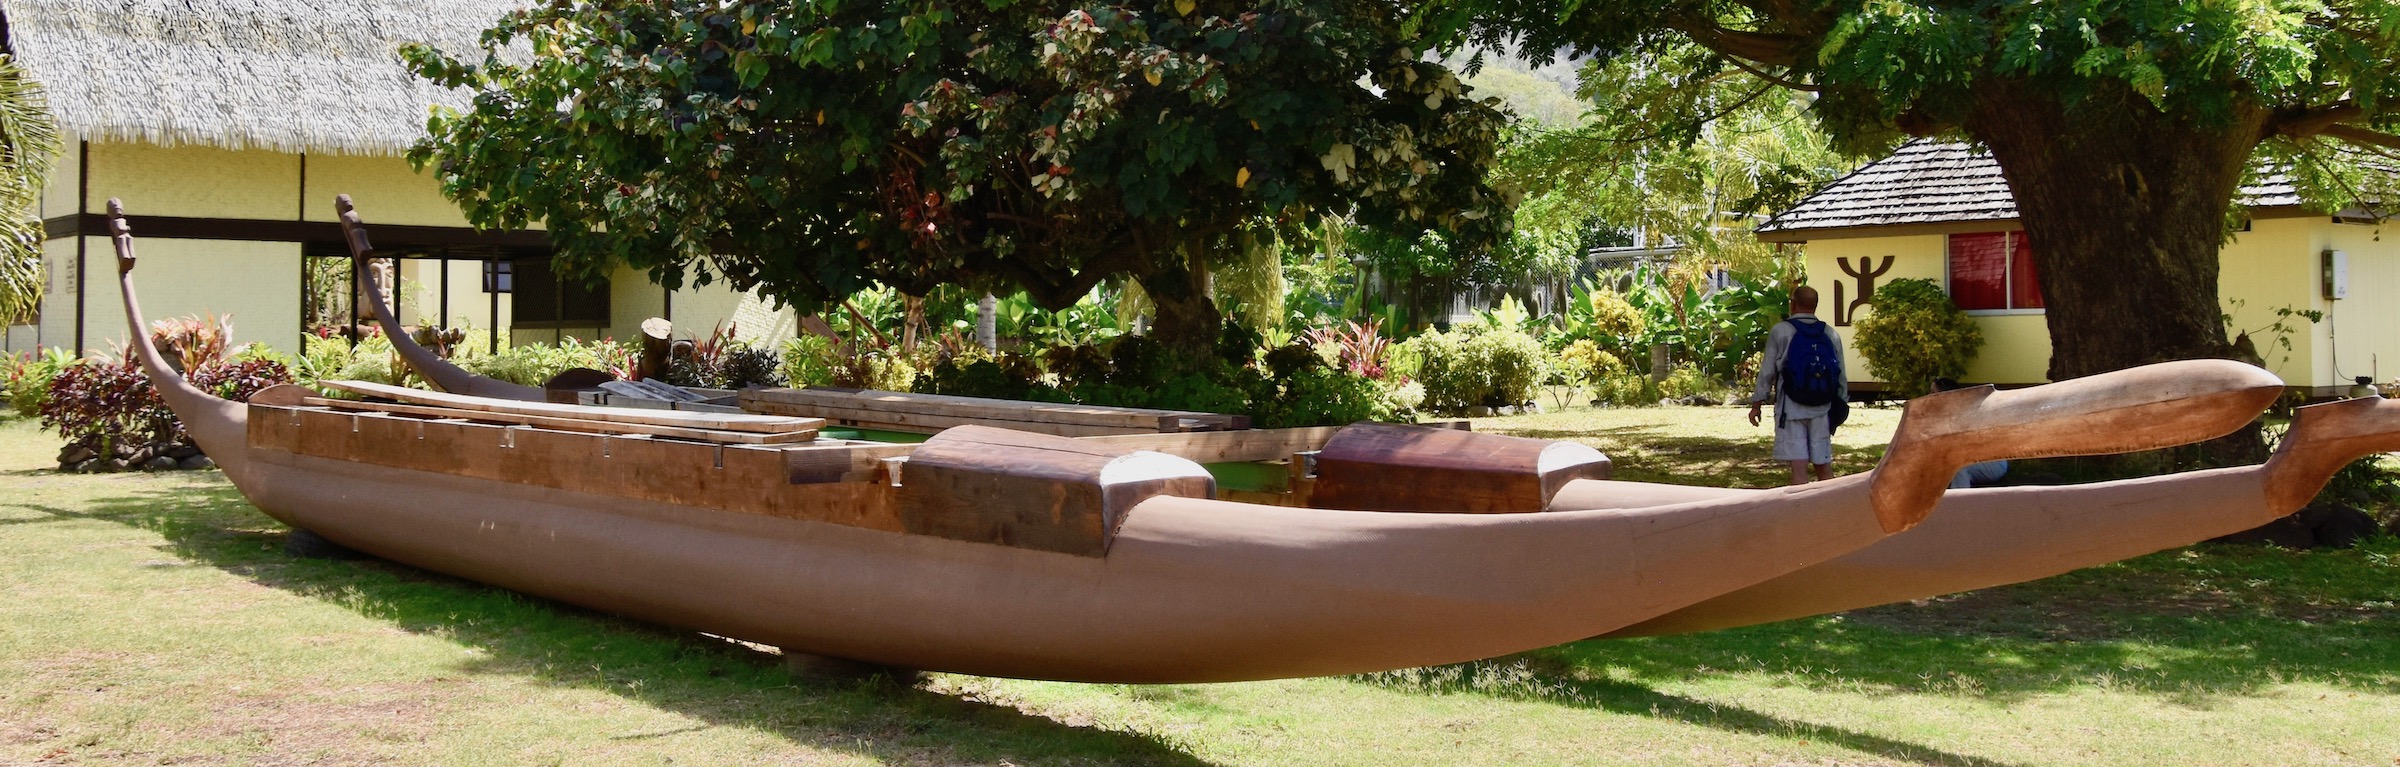 Double Canoe, Gauguin Cultural Centre, 